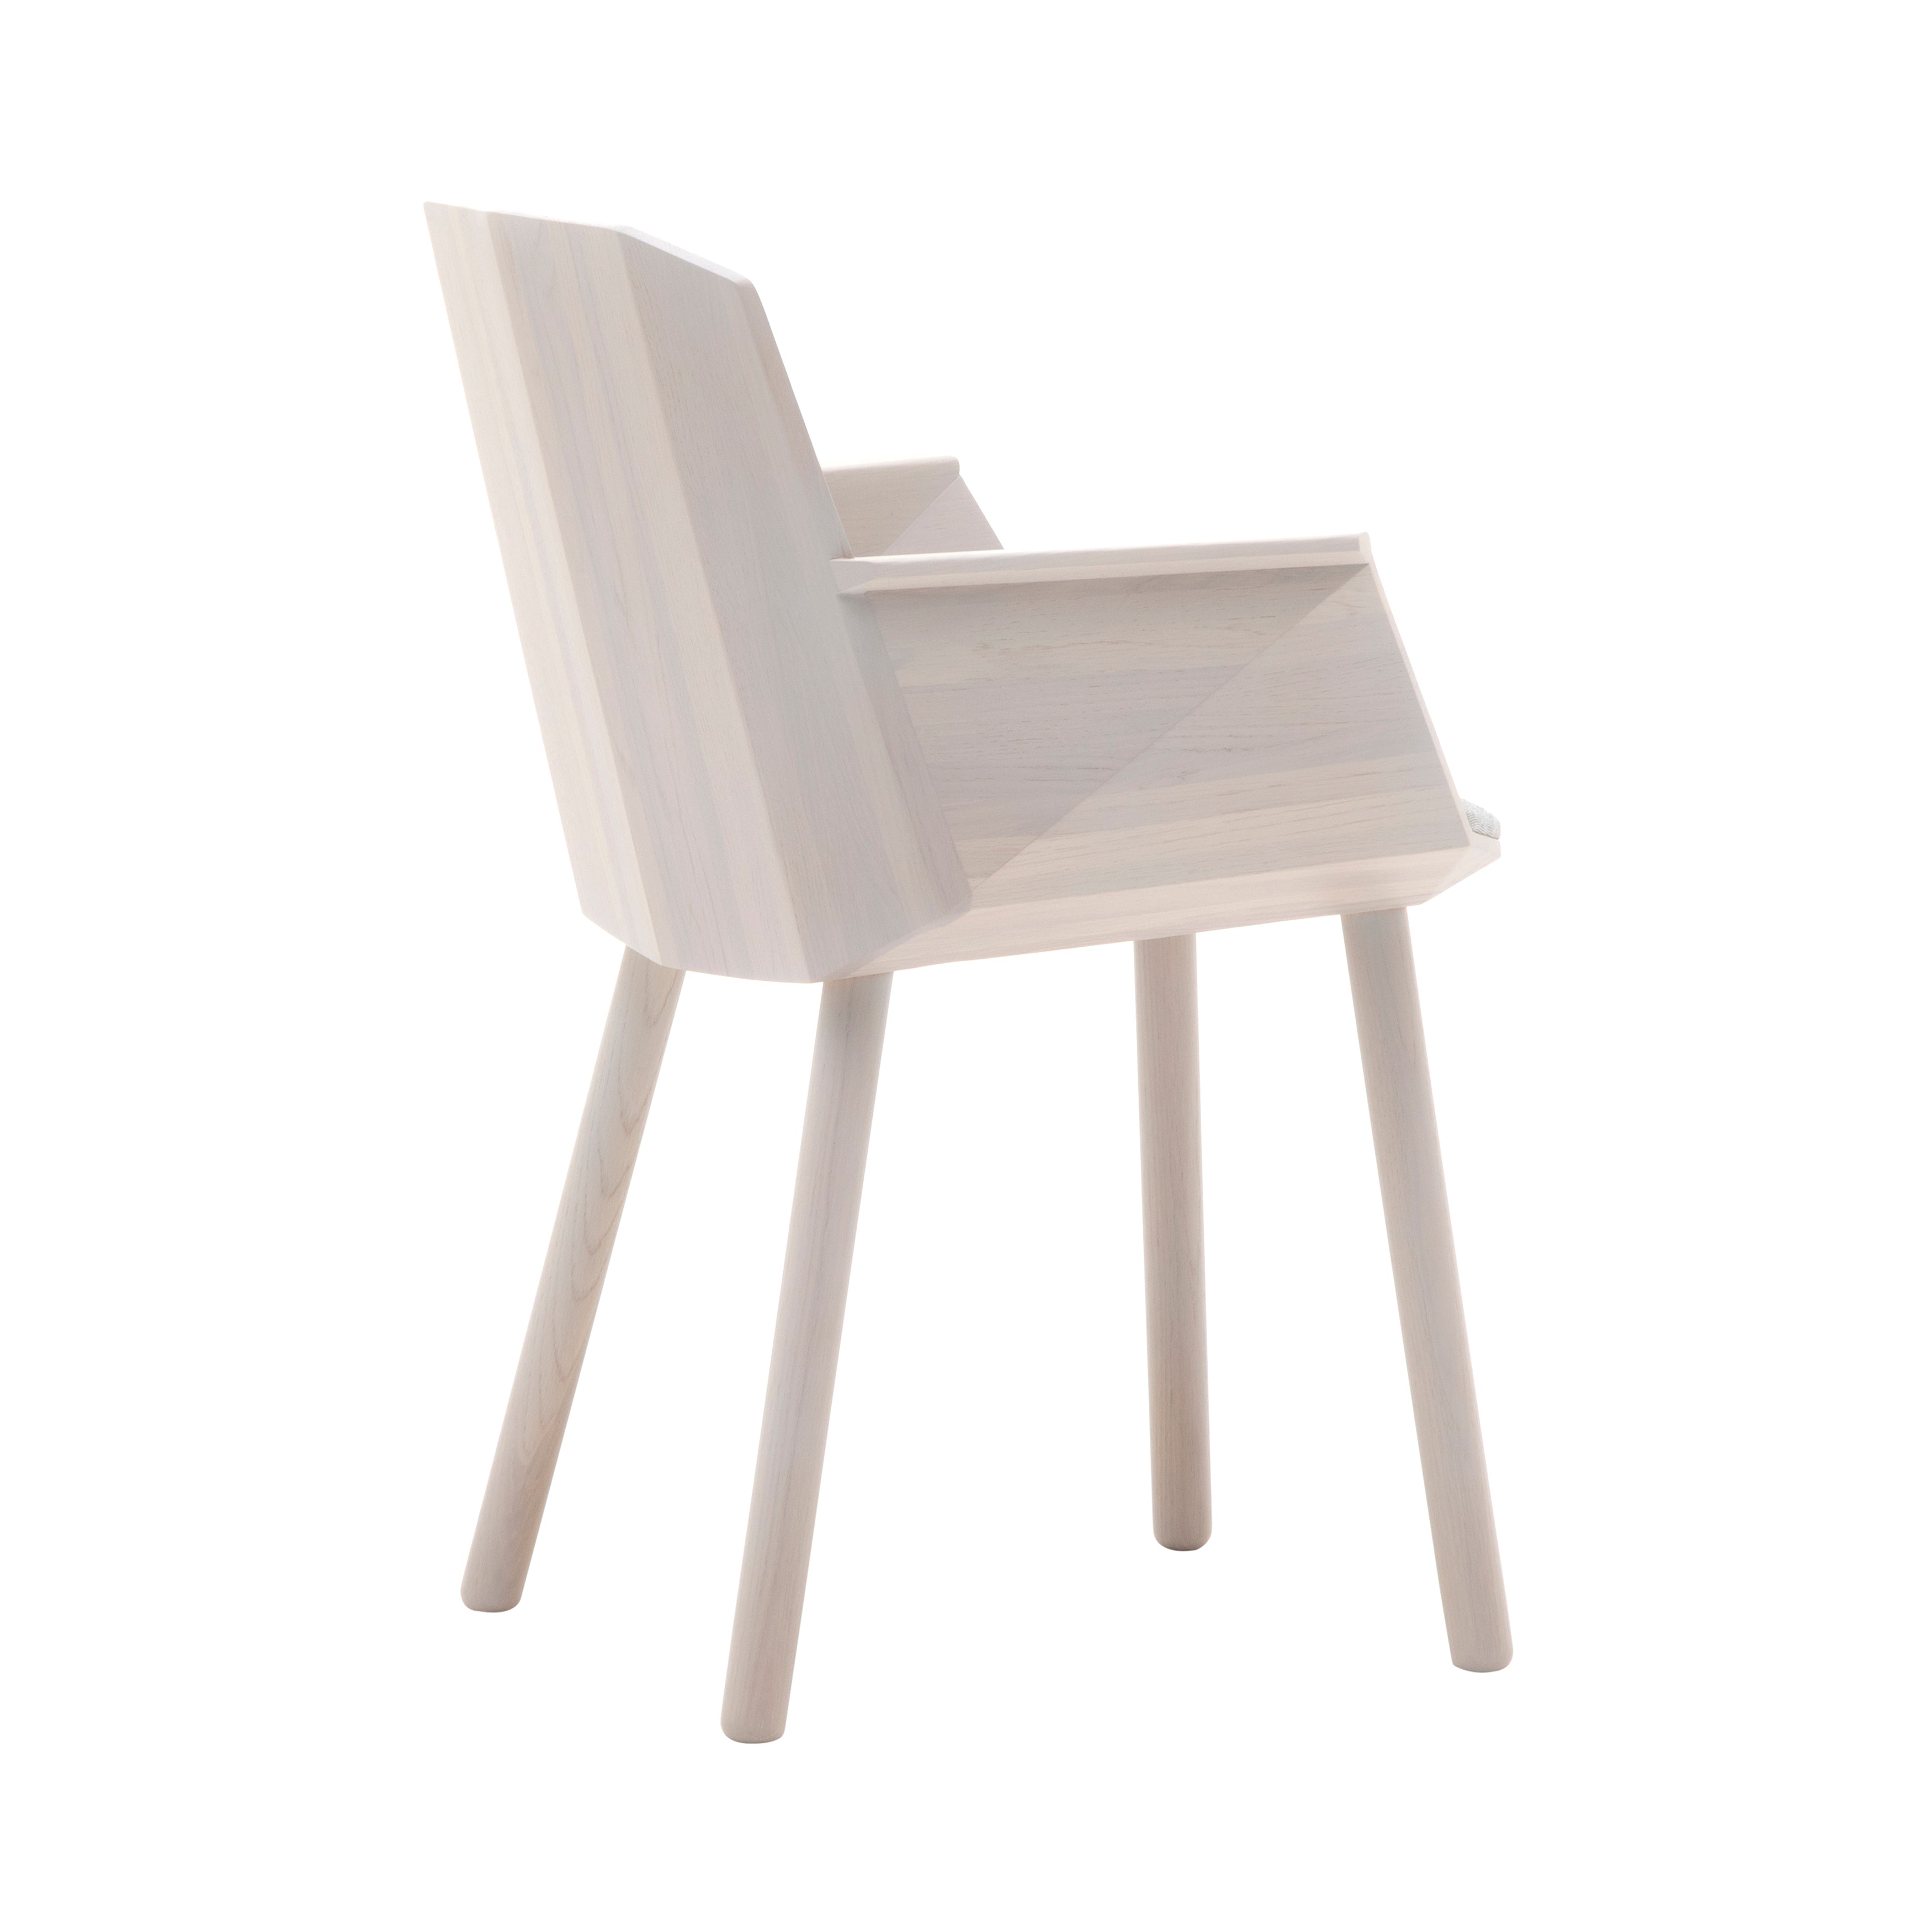 Colour Wood Armchair: Grain Beige